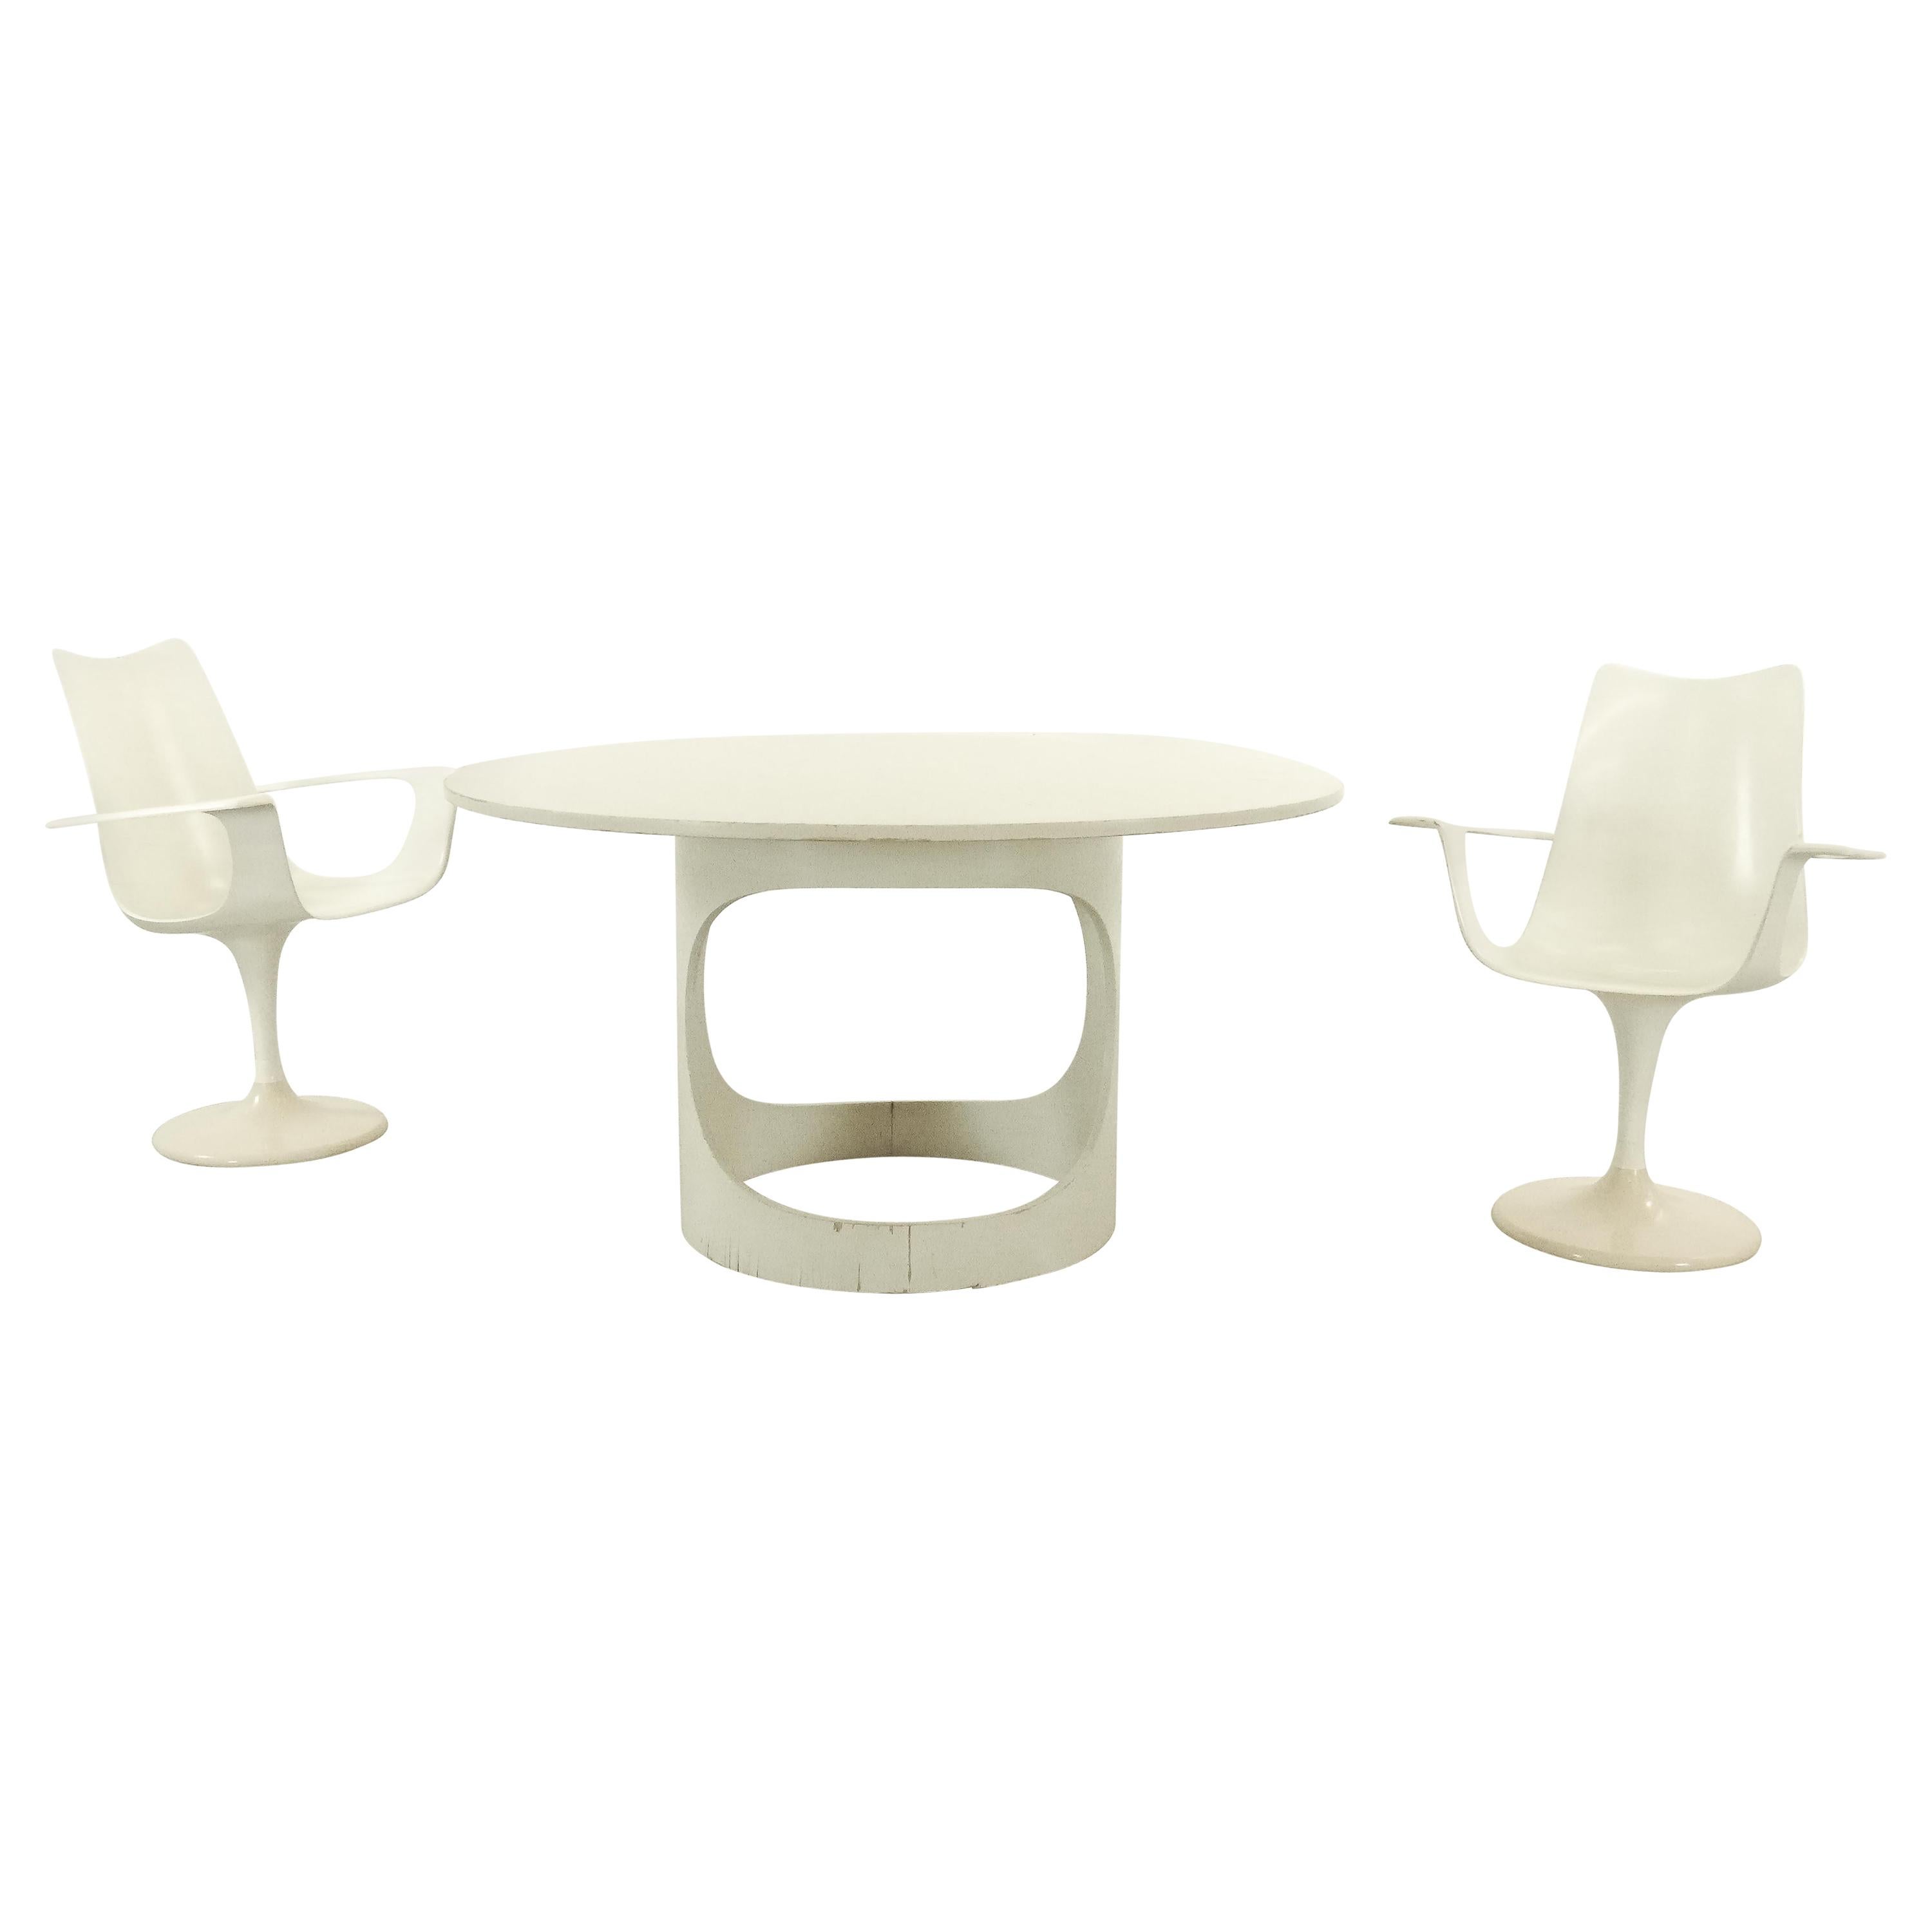 Arne Jacobsen Round White Pre-Pop Dining Table by ASKO, Finland circa 1968